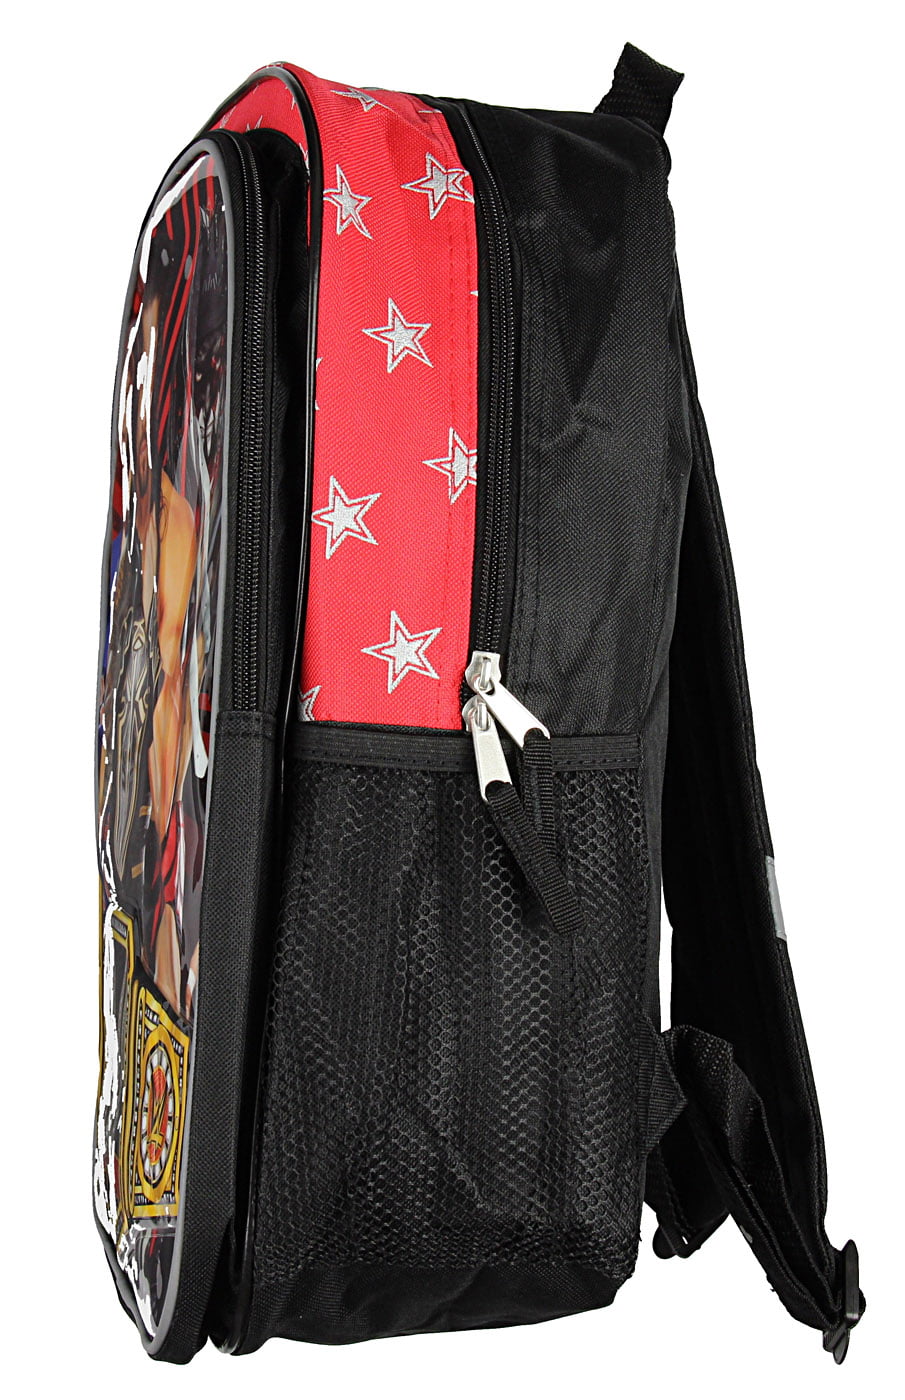 SIMBA Wwe Face To Face School Backpack 16 inch Waterproof  Shoulder Bag - Shoulder Bag